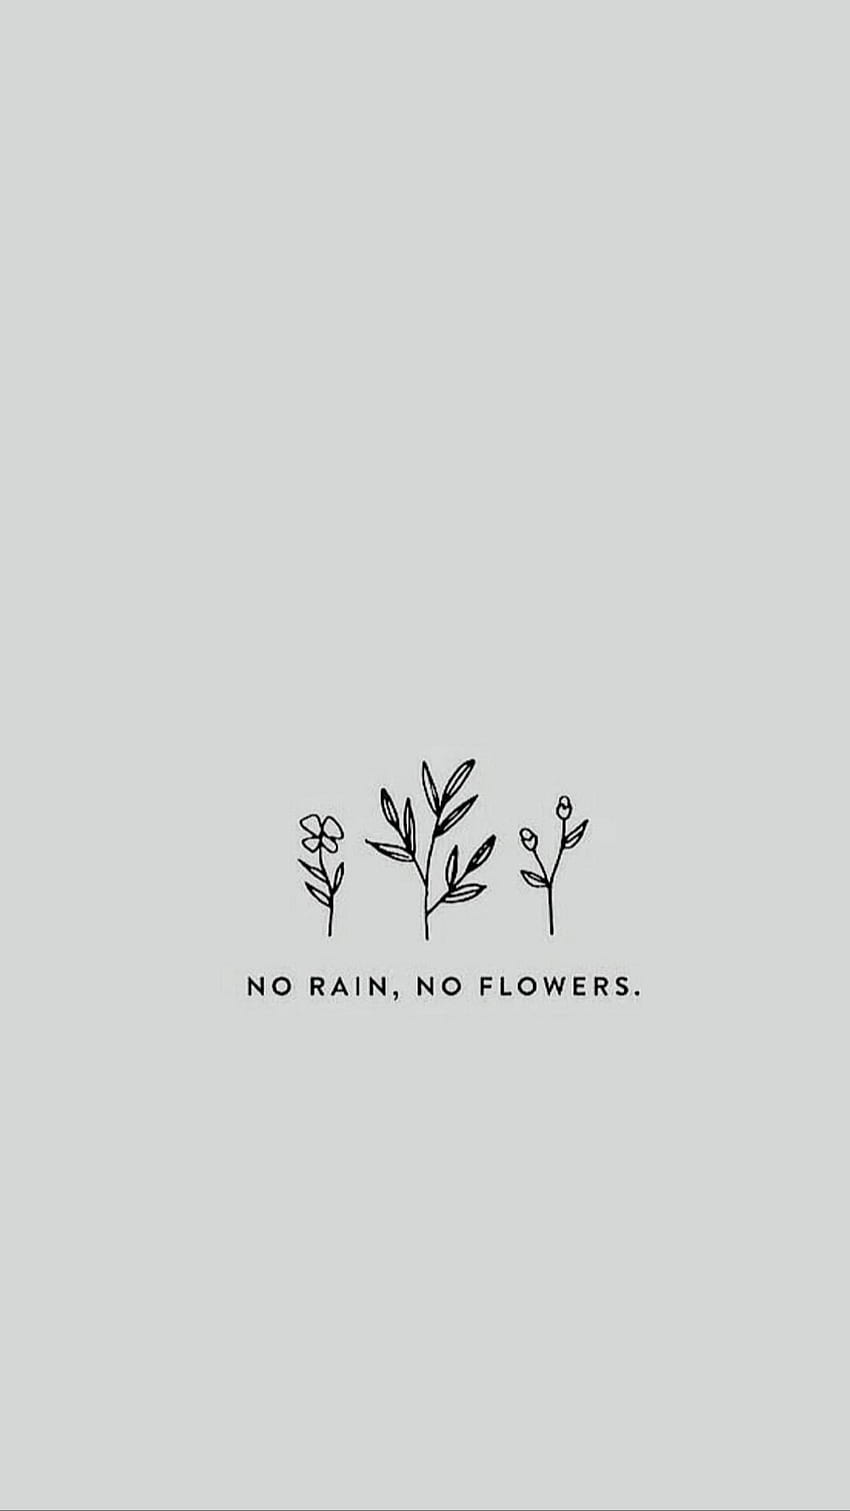 No Rain No Flowers Wallpaper  No rain no flowers Free wallpaper  Wallpaper